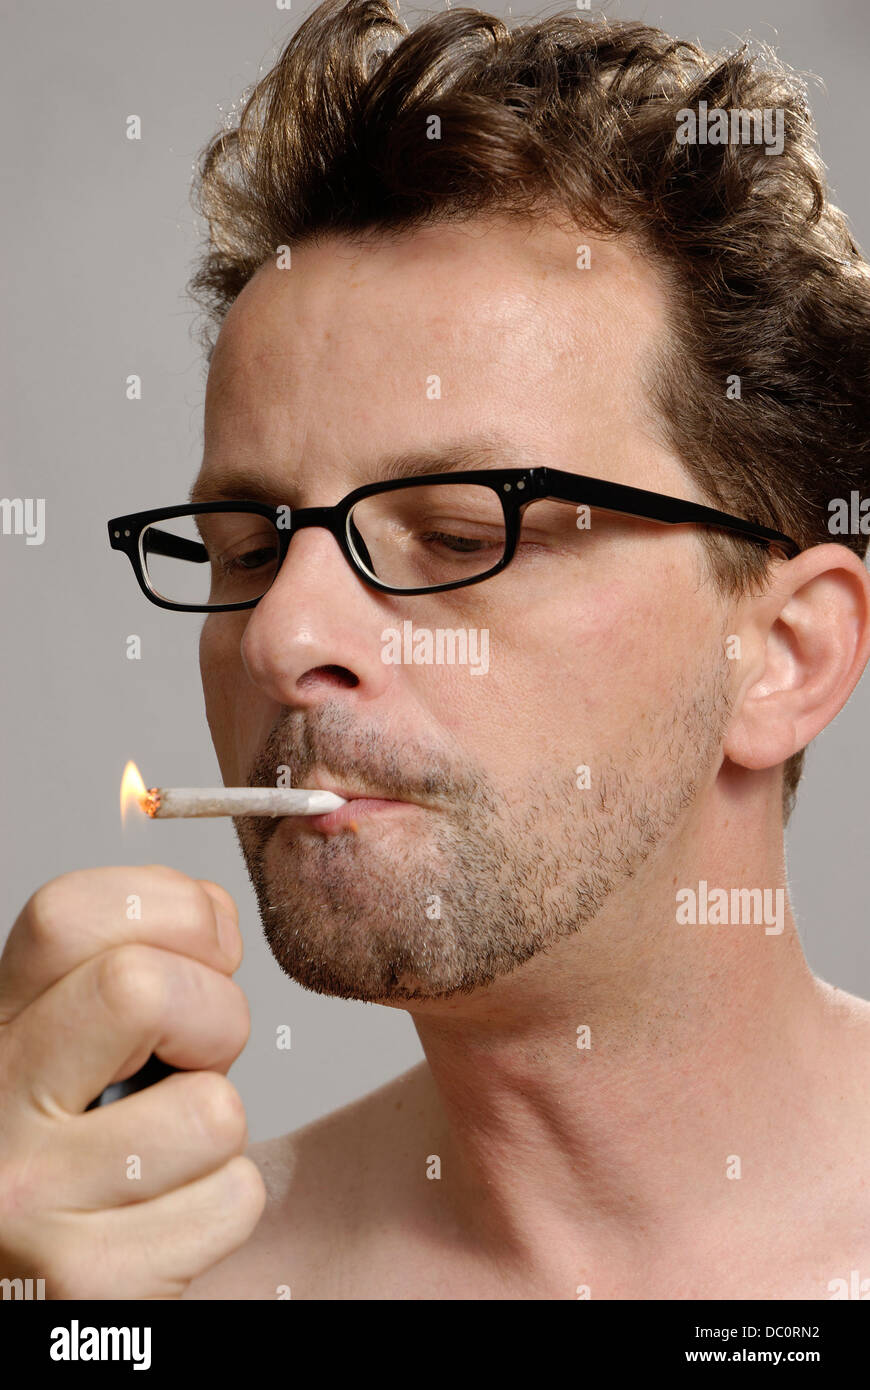 A man lights a cigarette Stock Photo